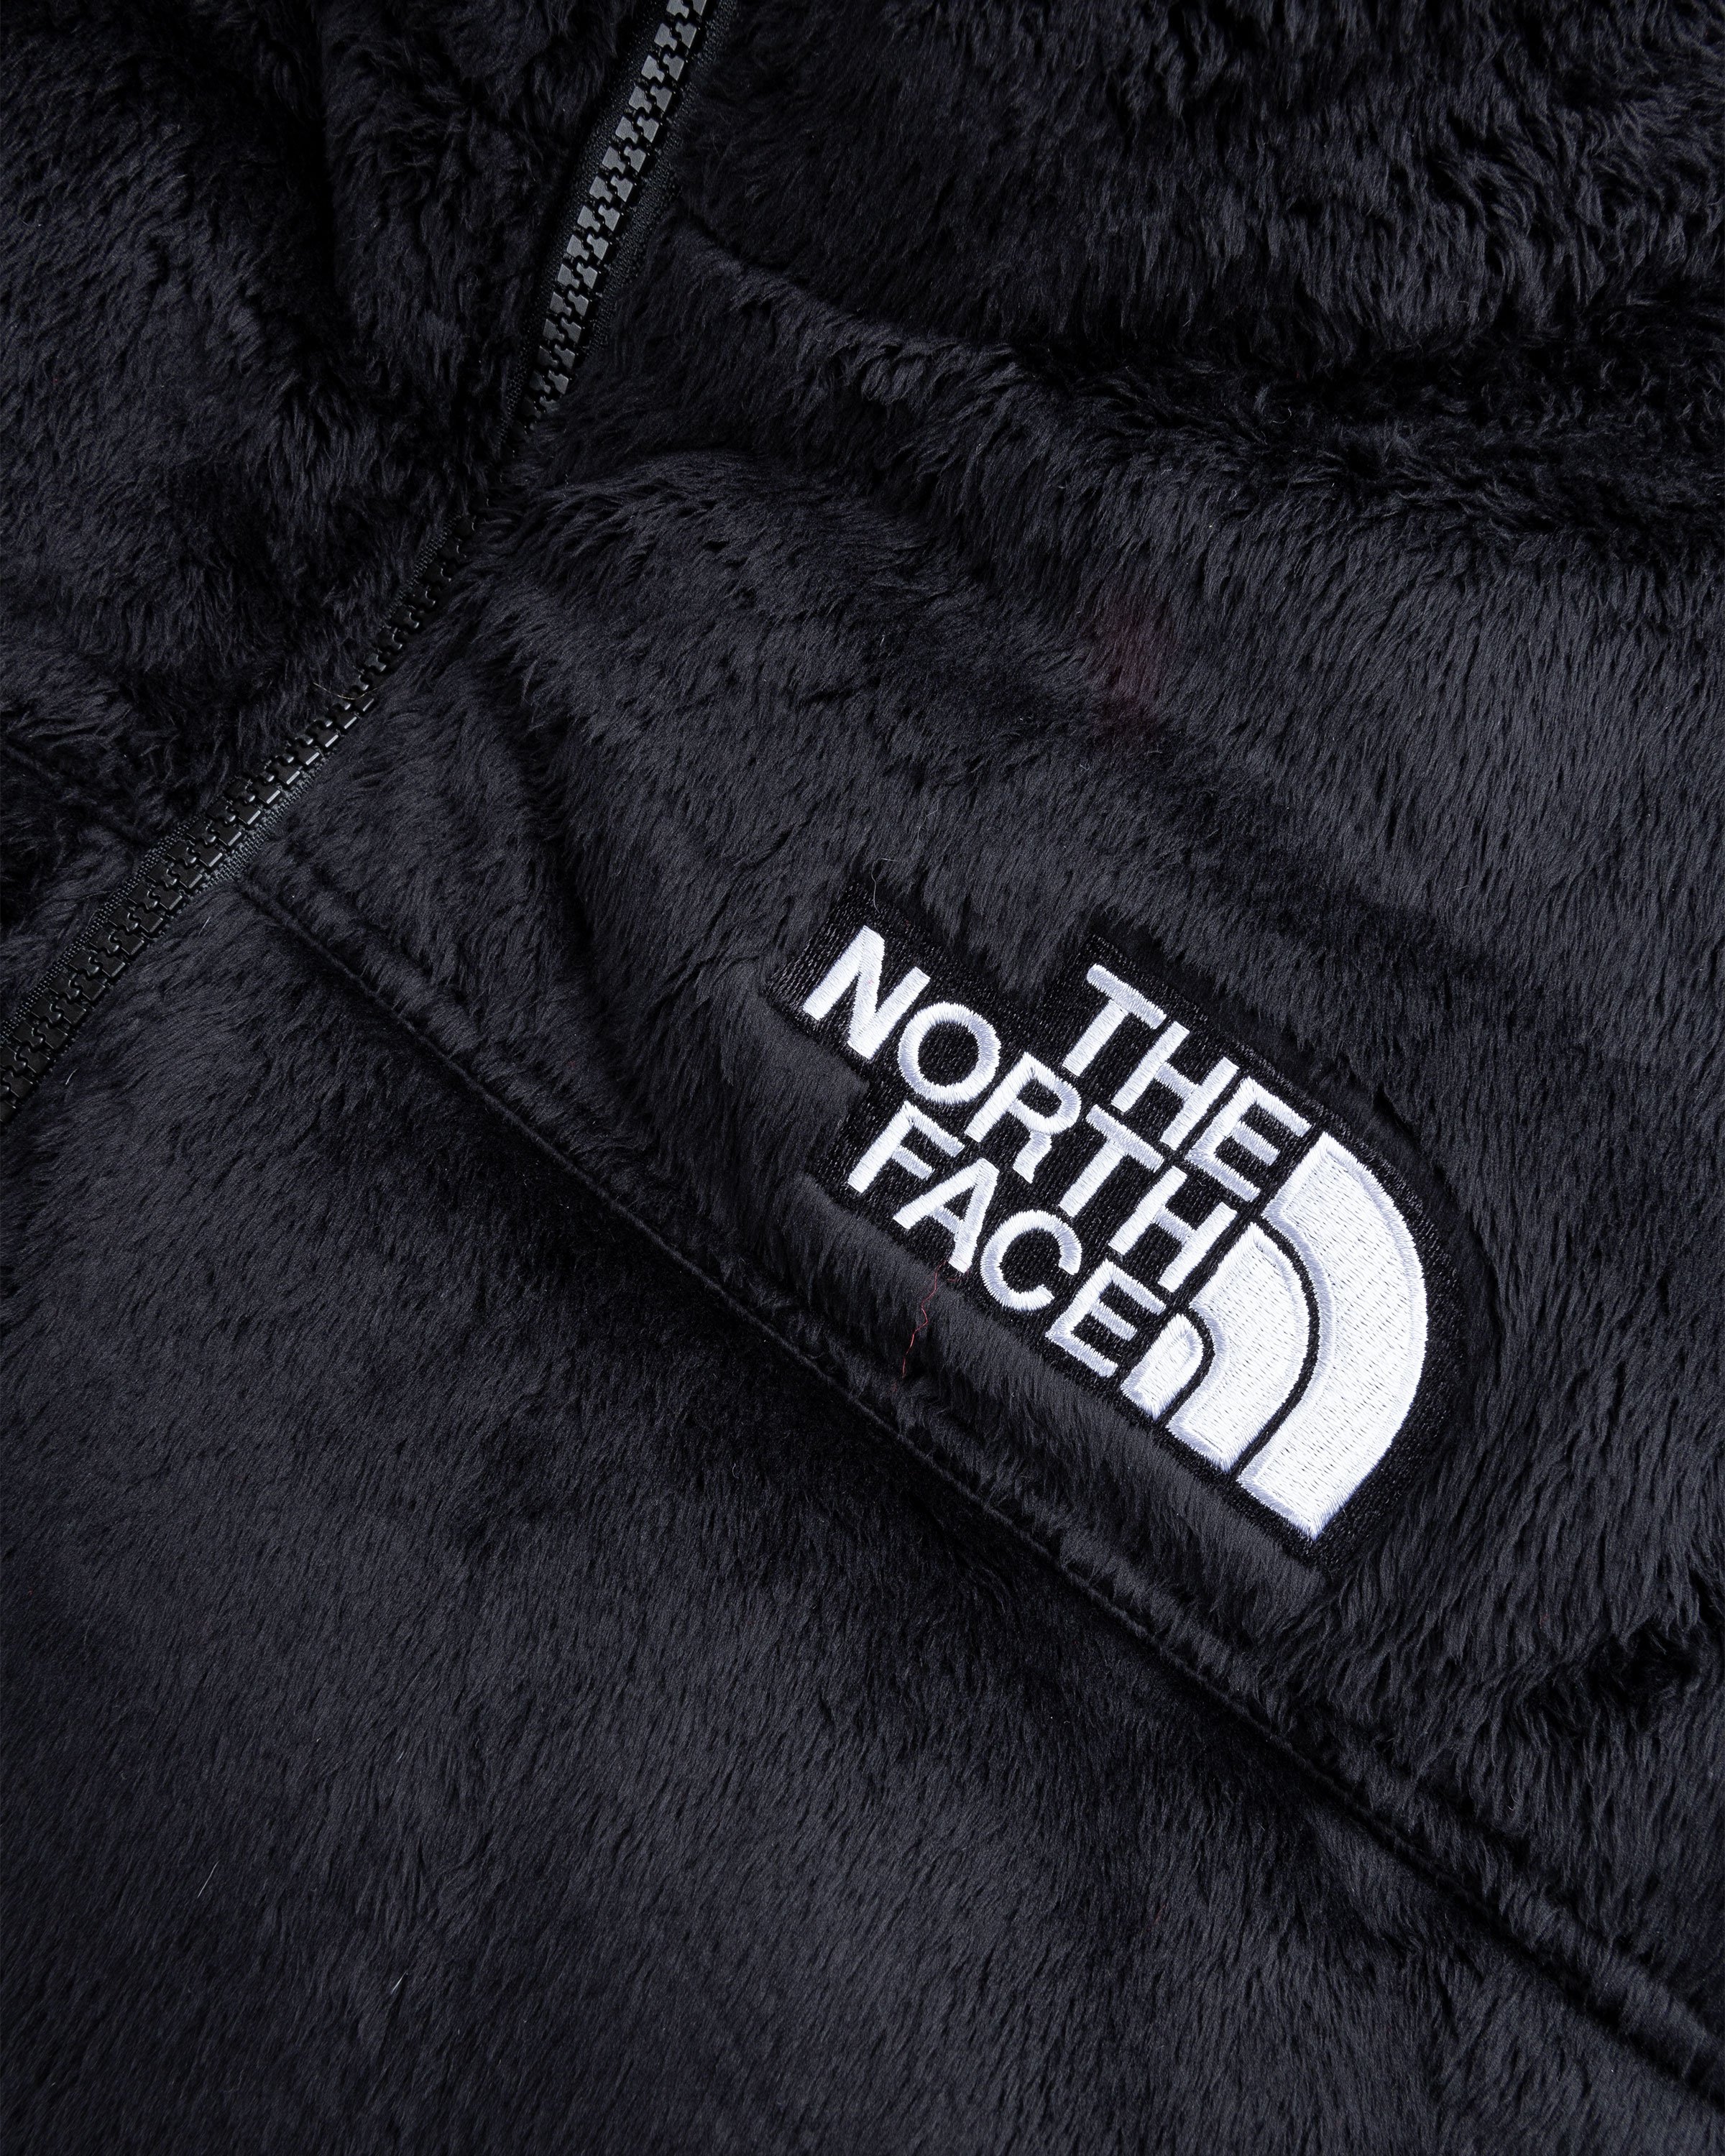 The North Face - Versa Velour Nuptse Jacket Black - Clothing - Black - Image 6